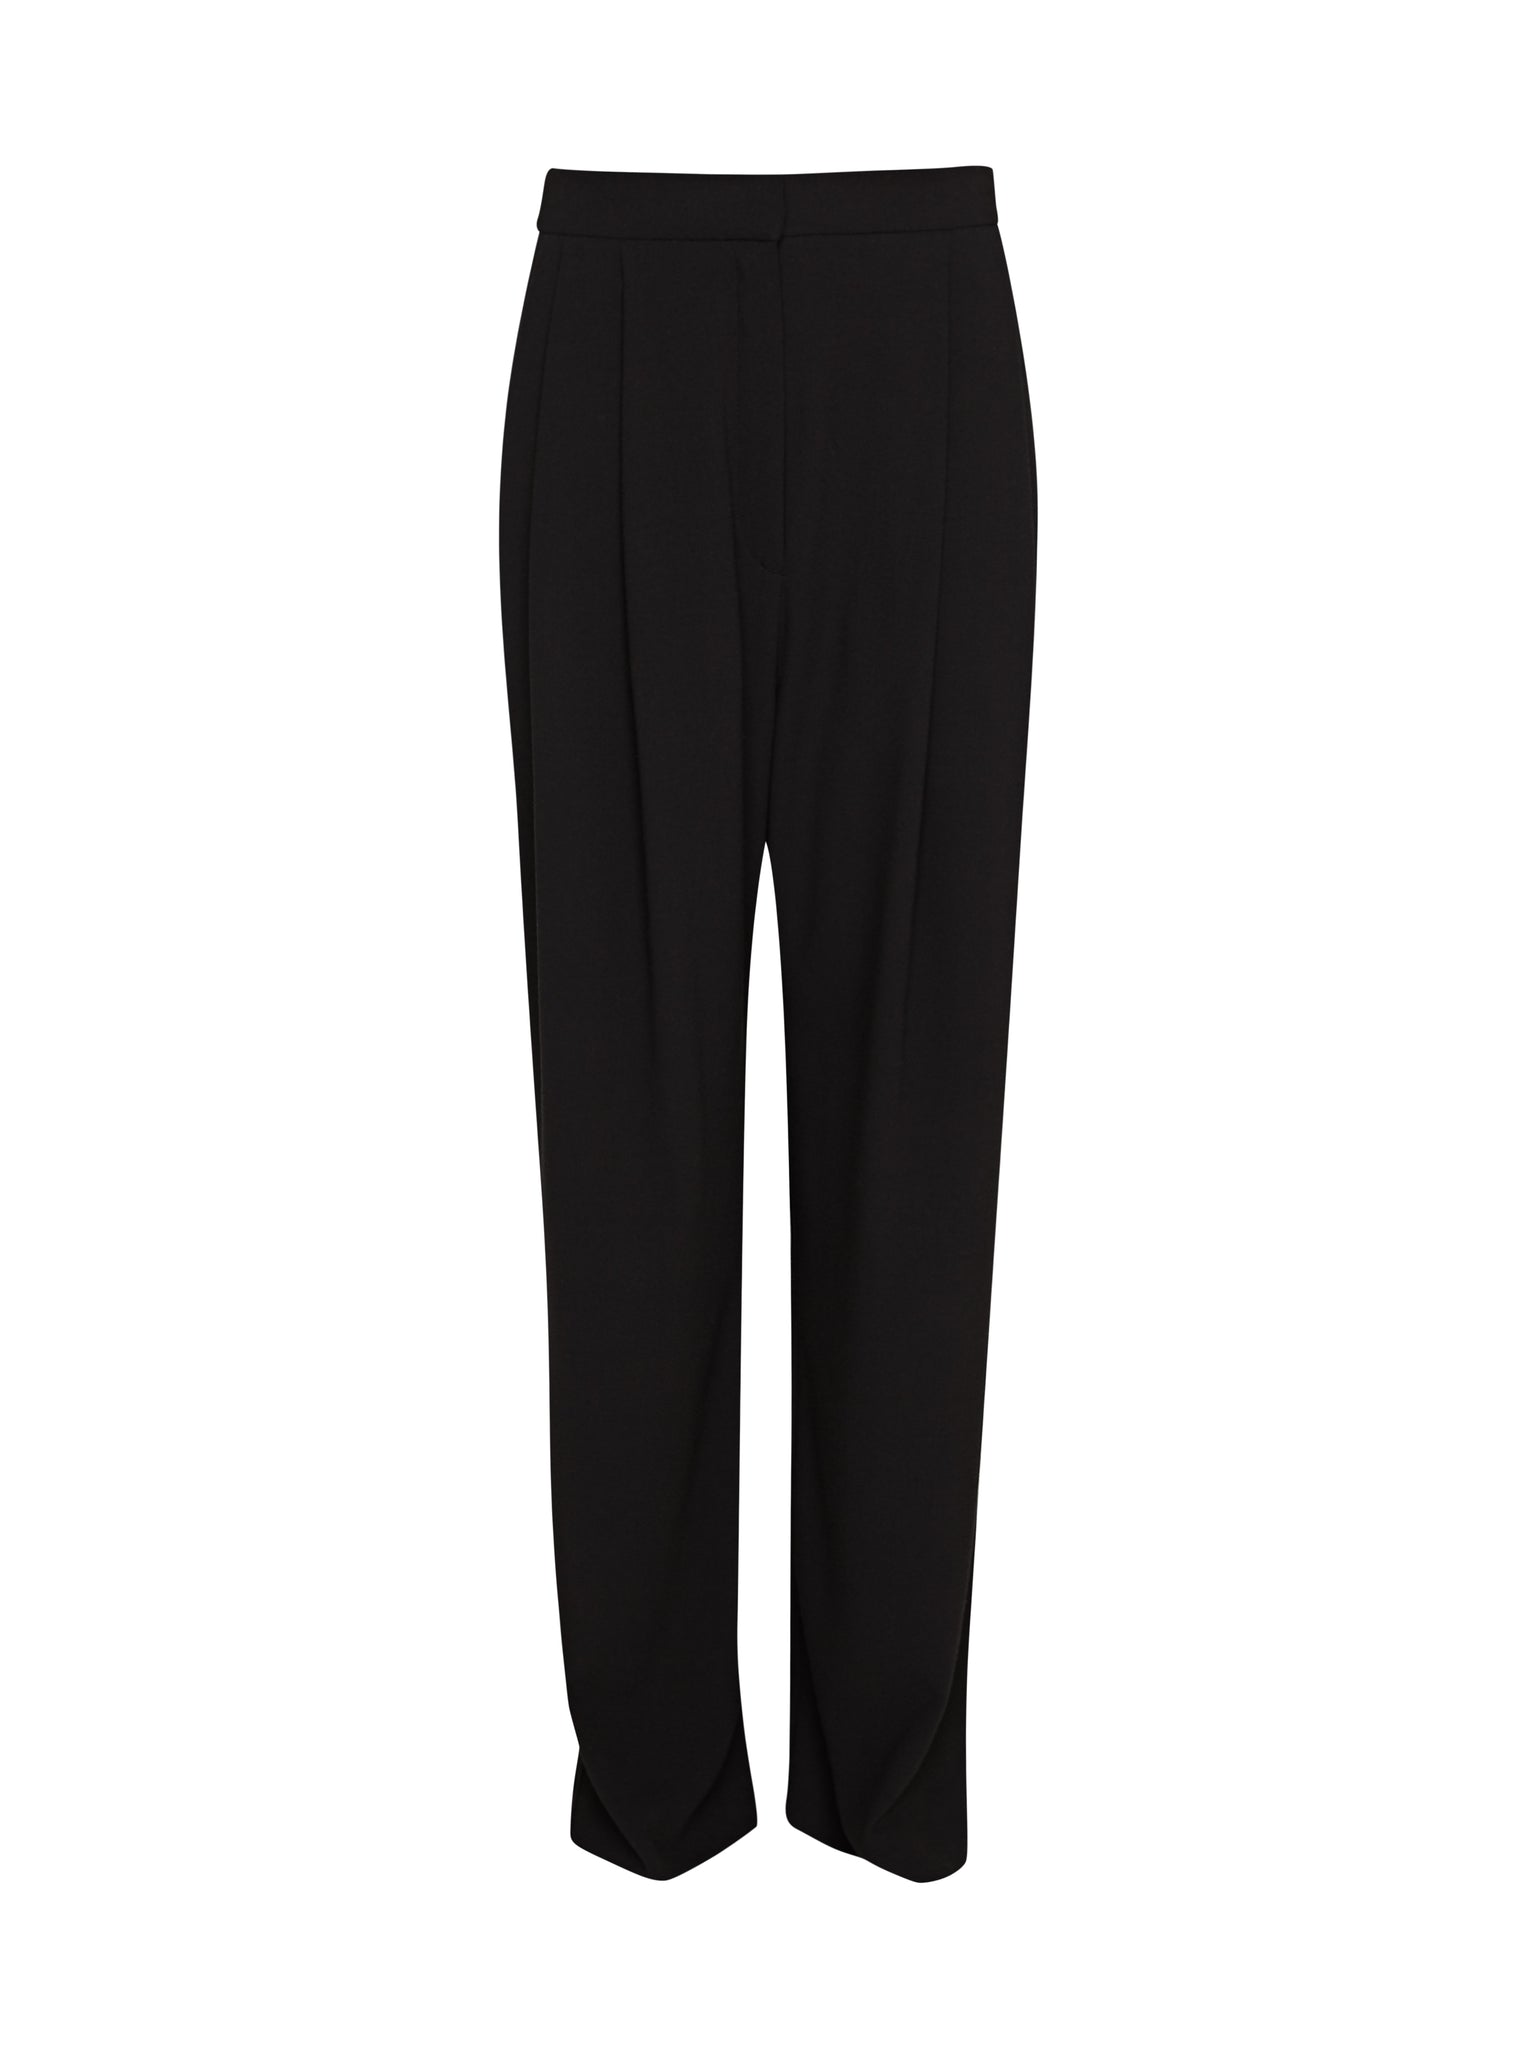 Gilora trousers black